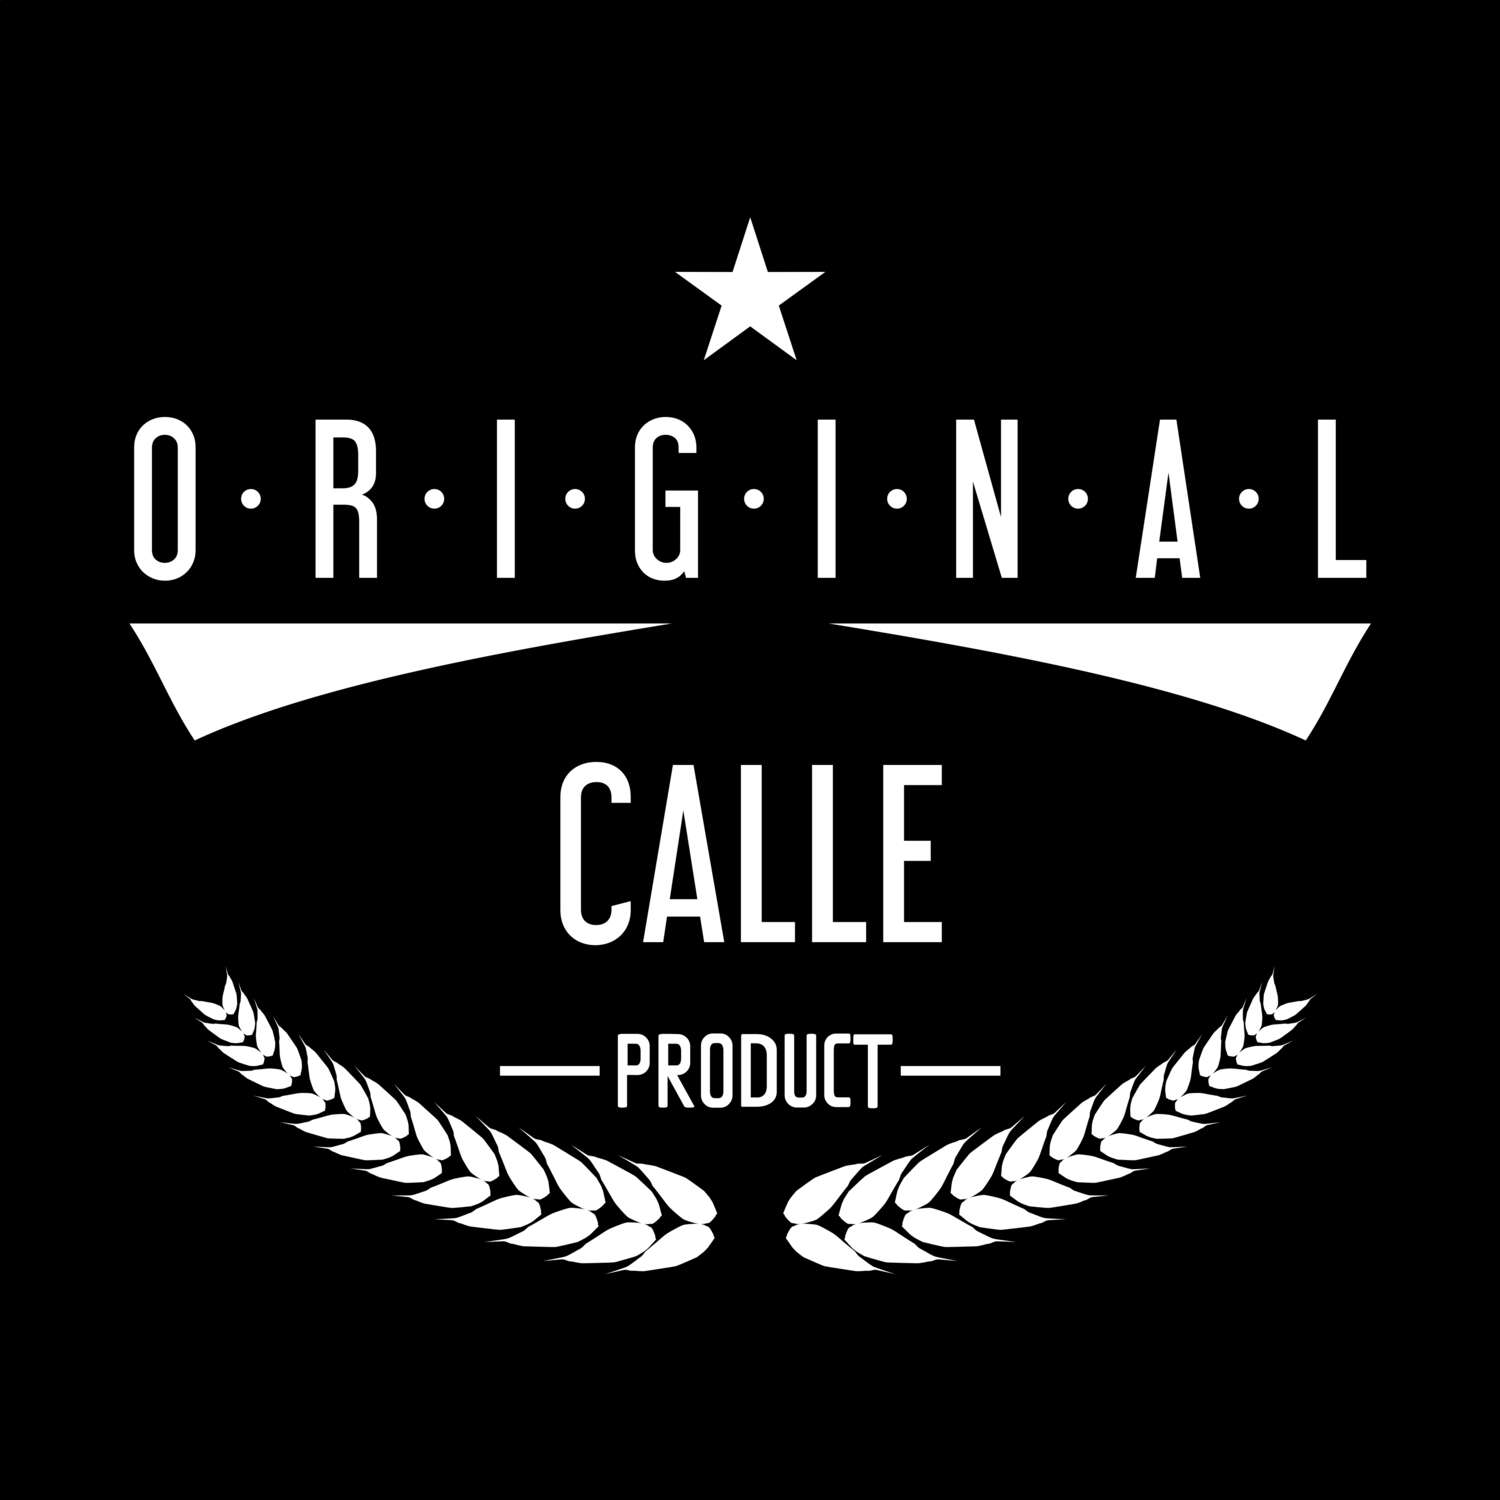 Calle T-Shirt »Original Product«